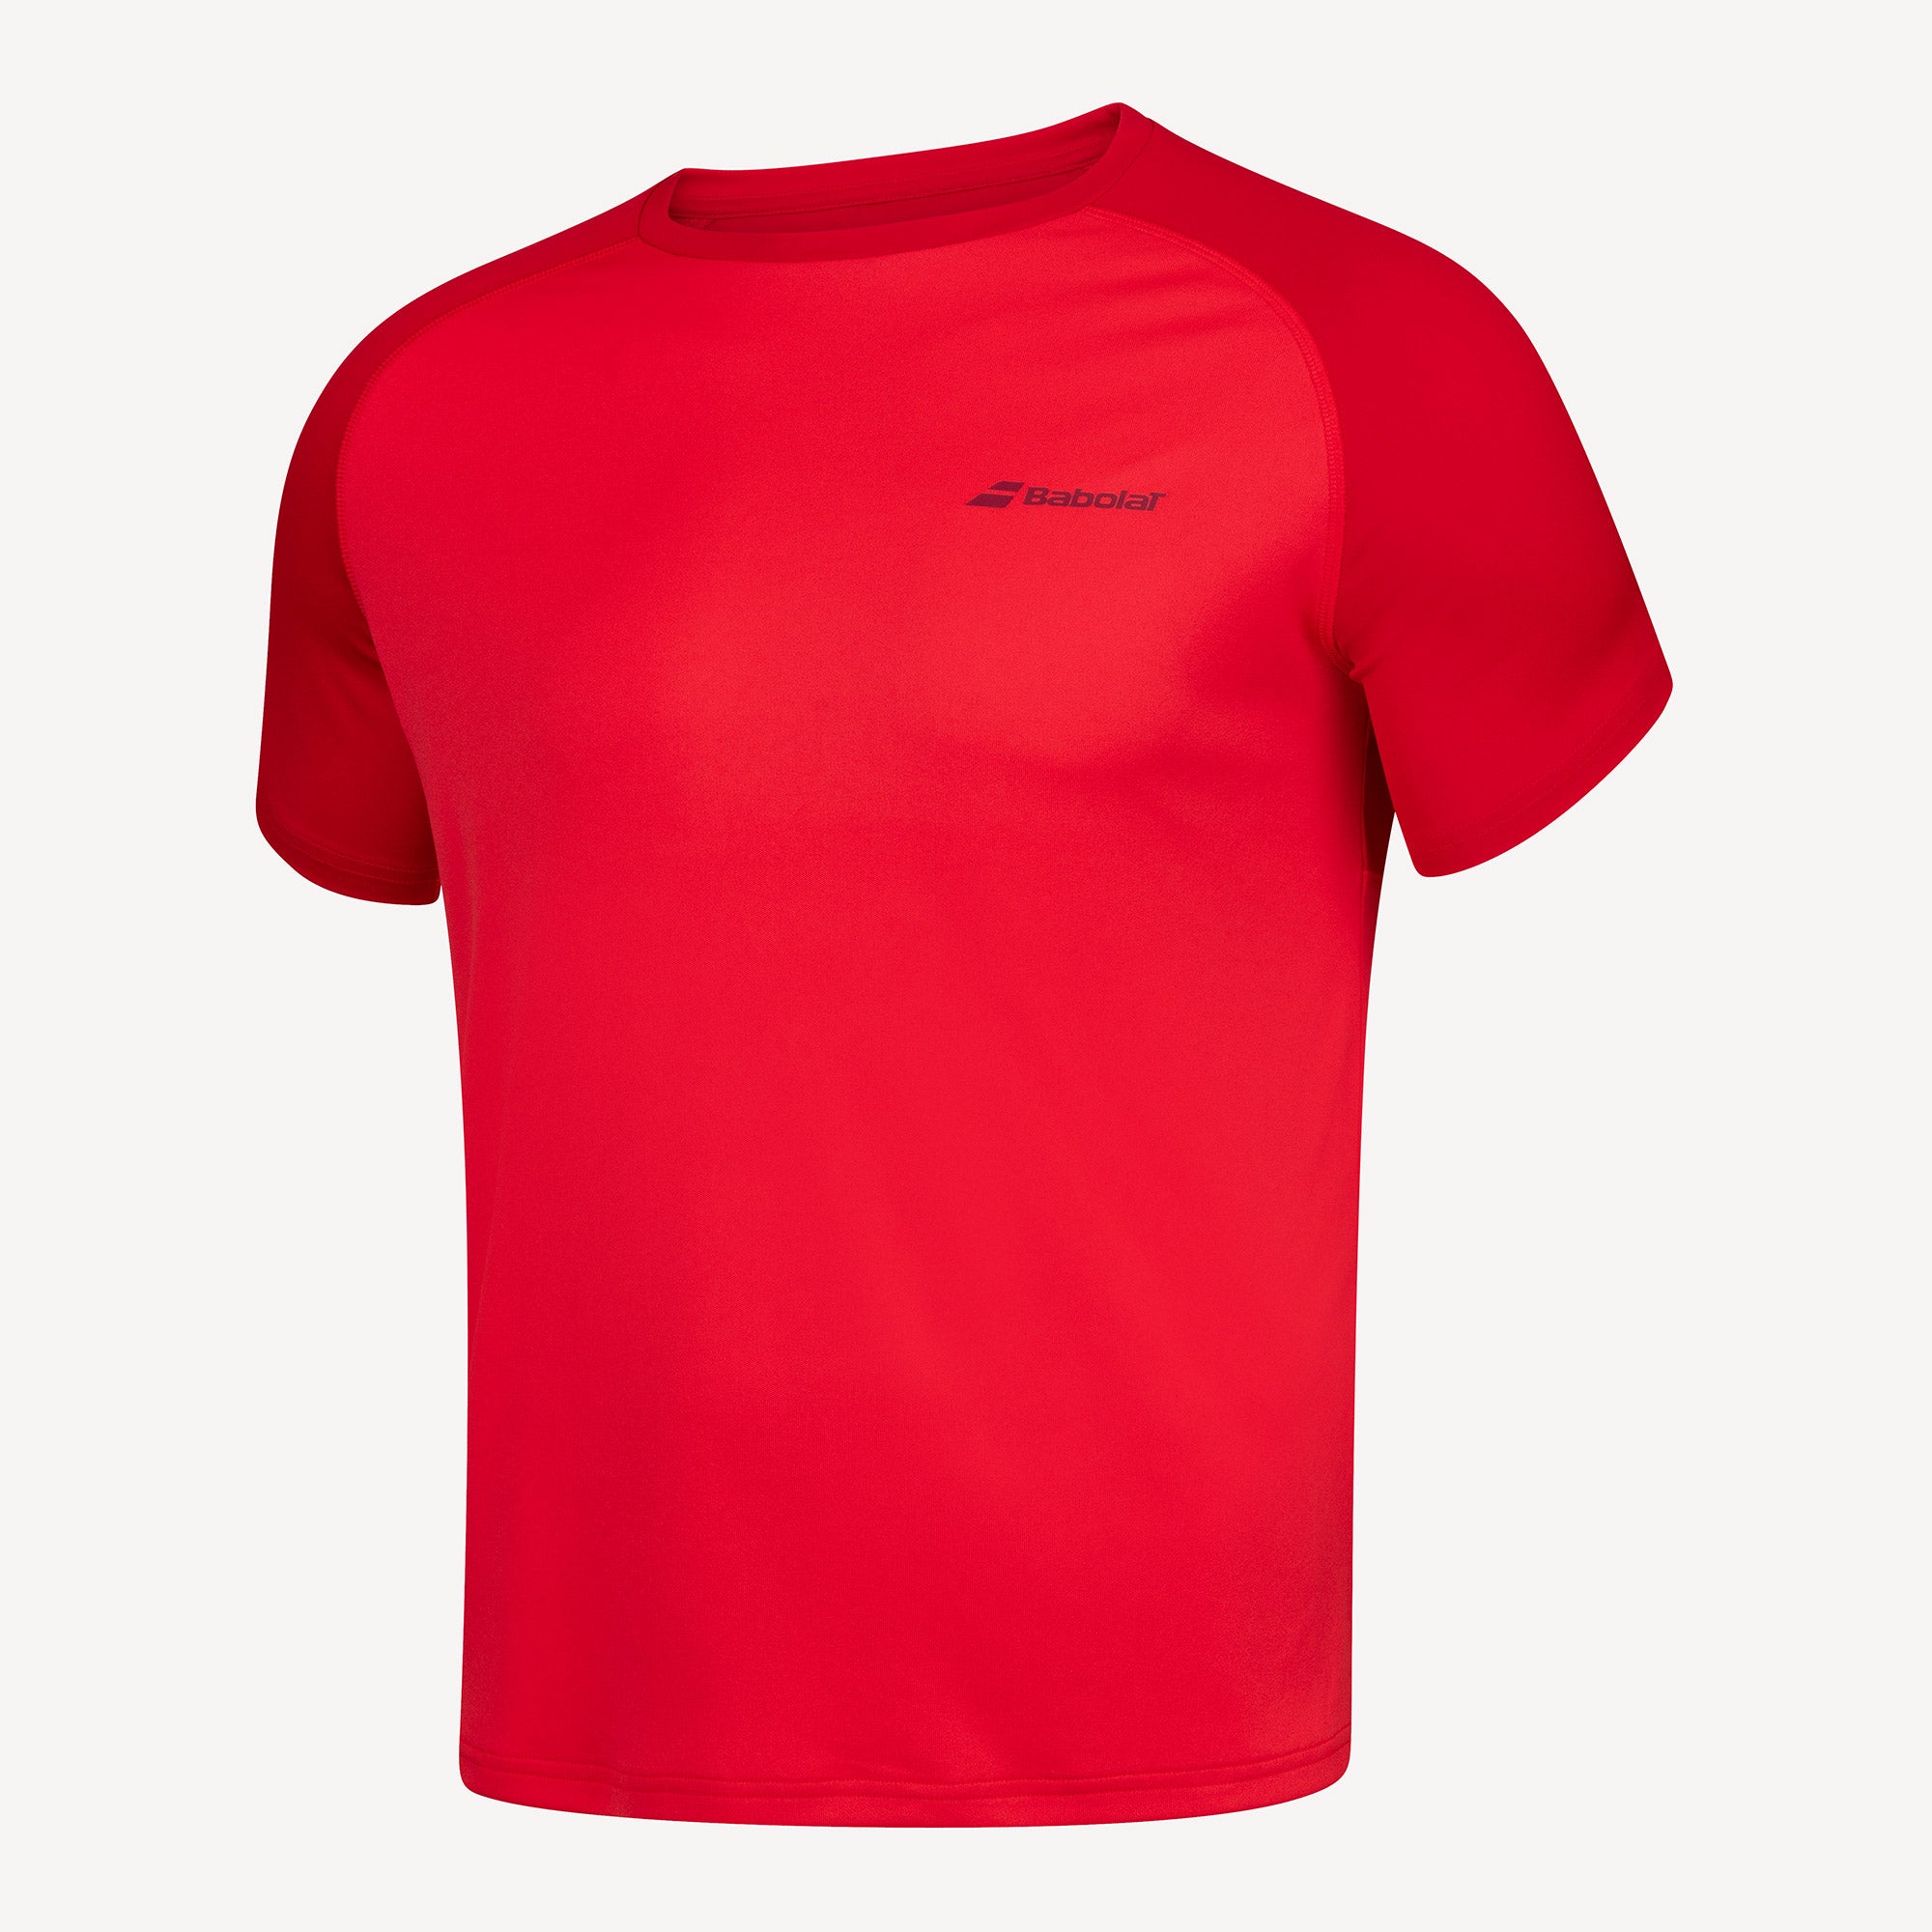 Babolat Play Club Men's Tennis Shirt Red (1)